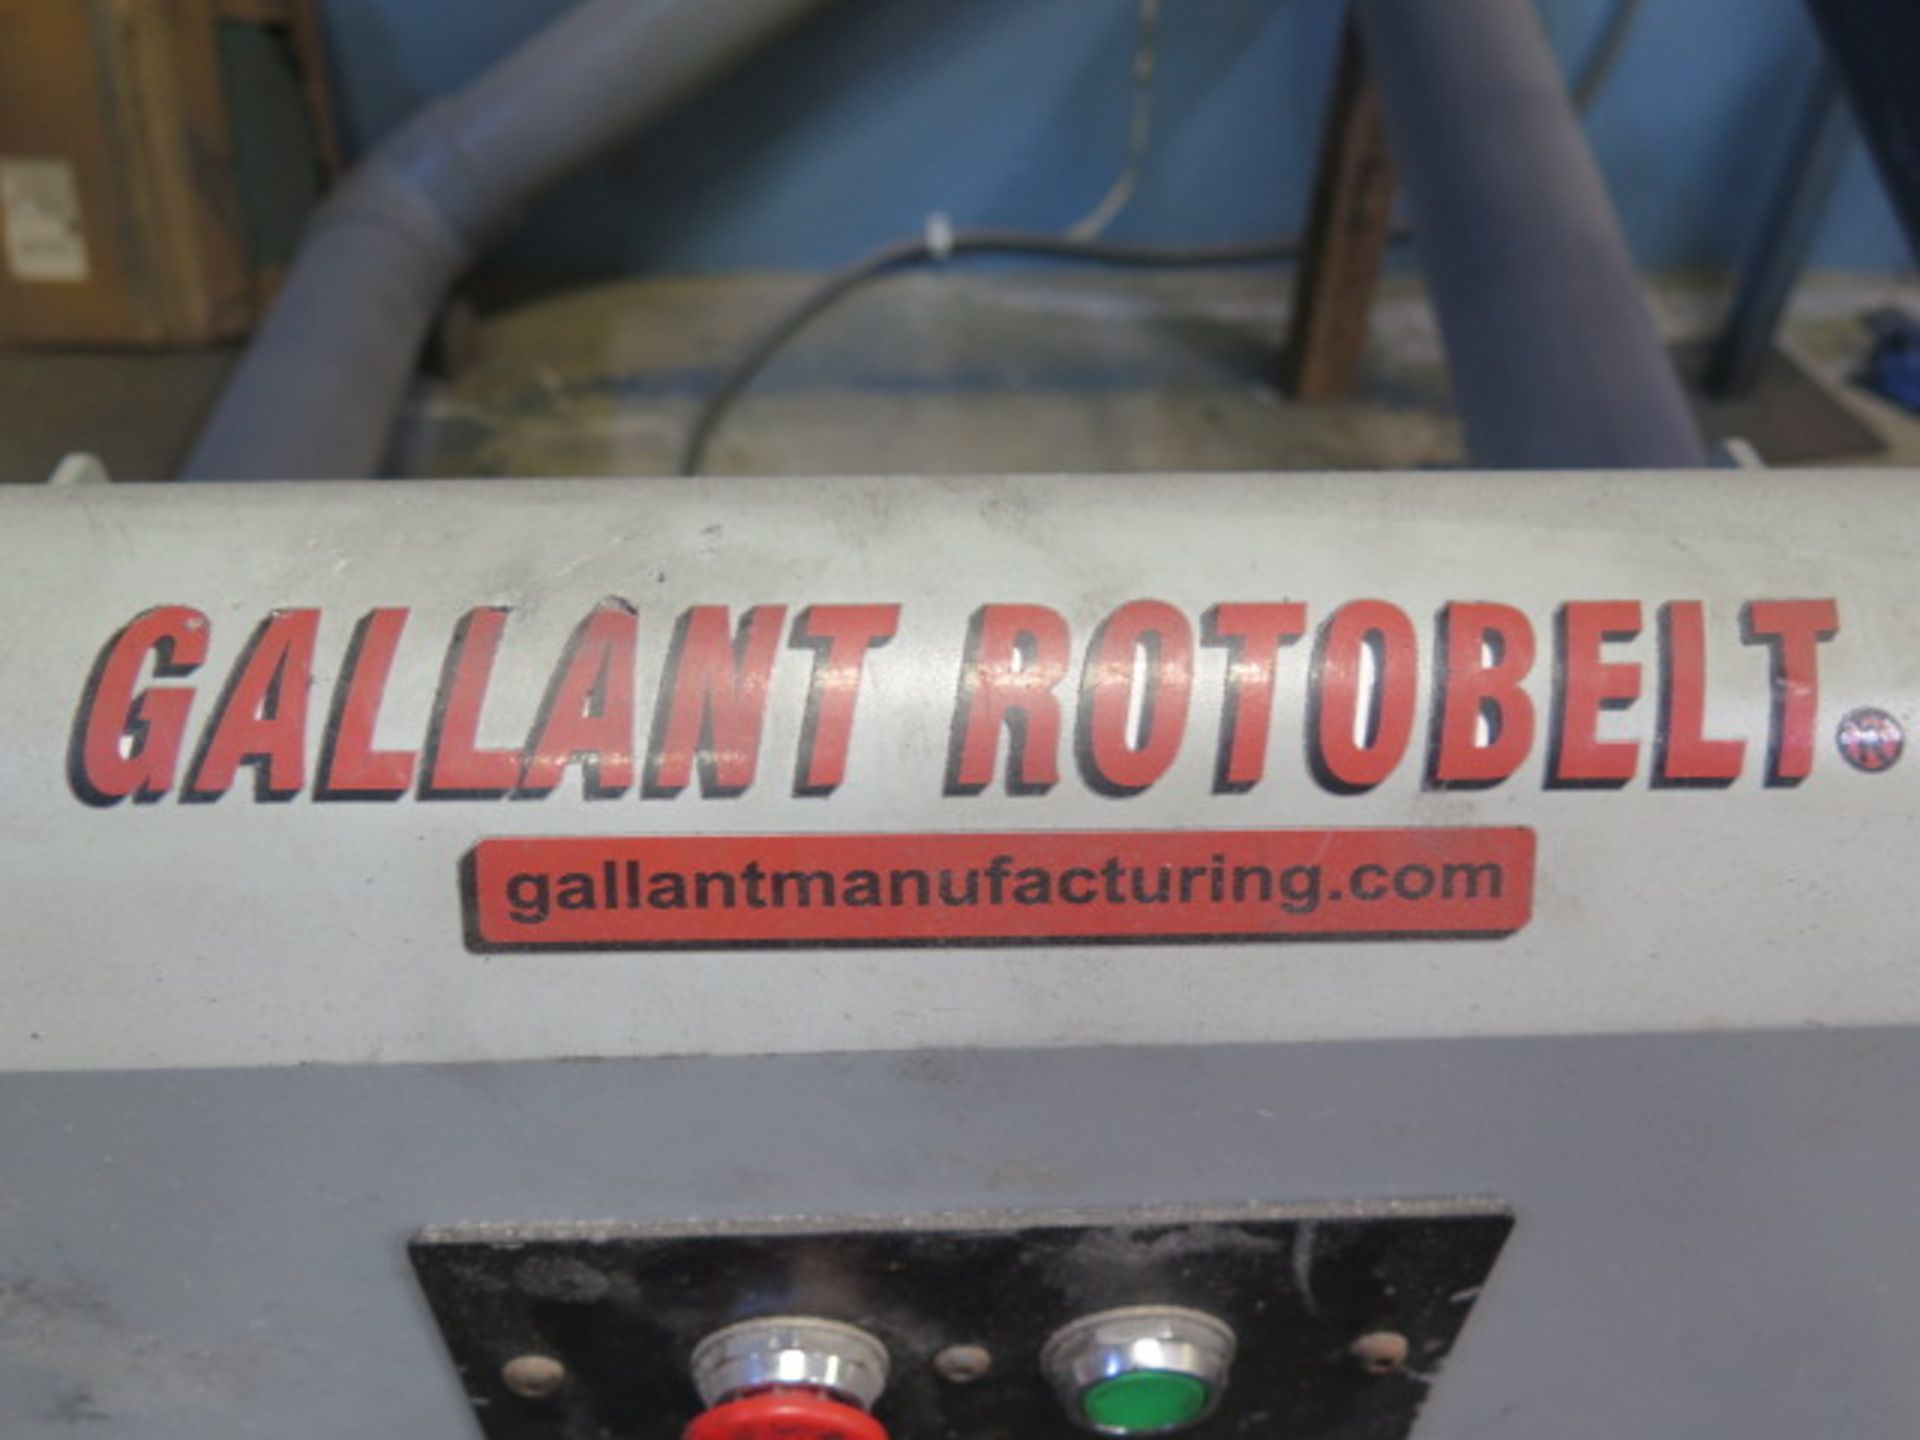 Gallant "Rotobelt" mdl. 1 Dual 4" Belt Sander s/n 41220 (SOLD AS-IS - NO WARRANTY) - Image 3 of 10